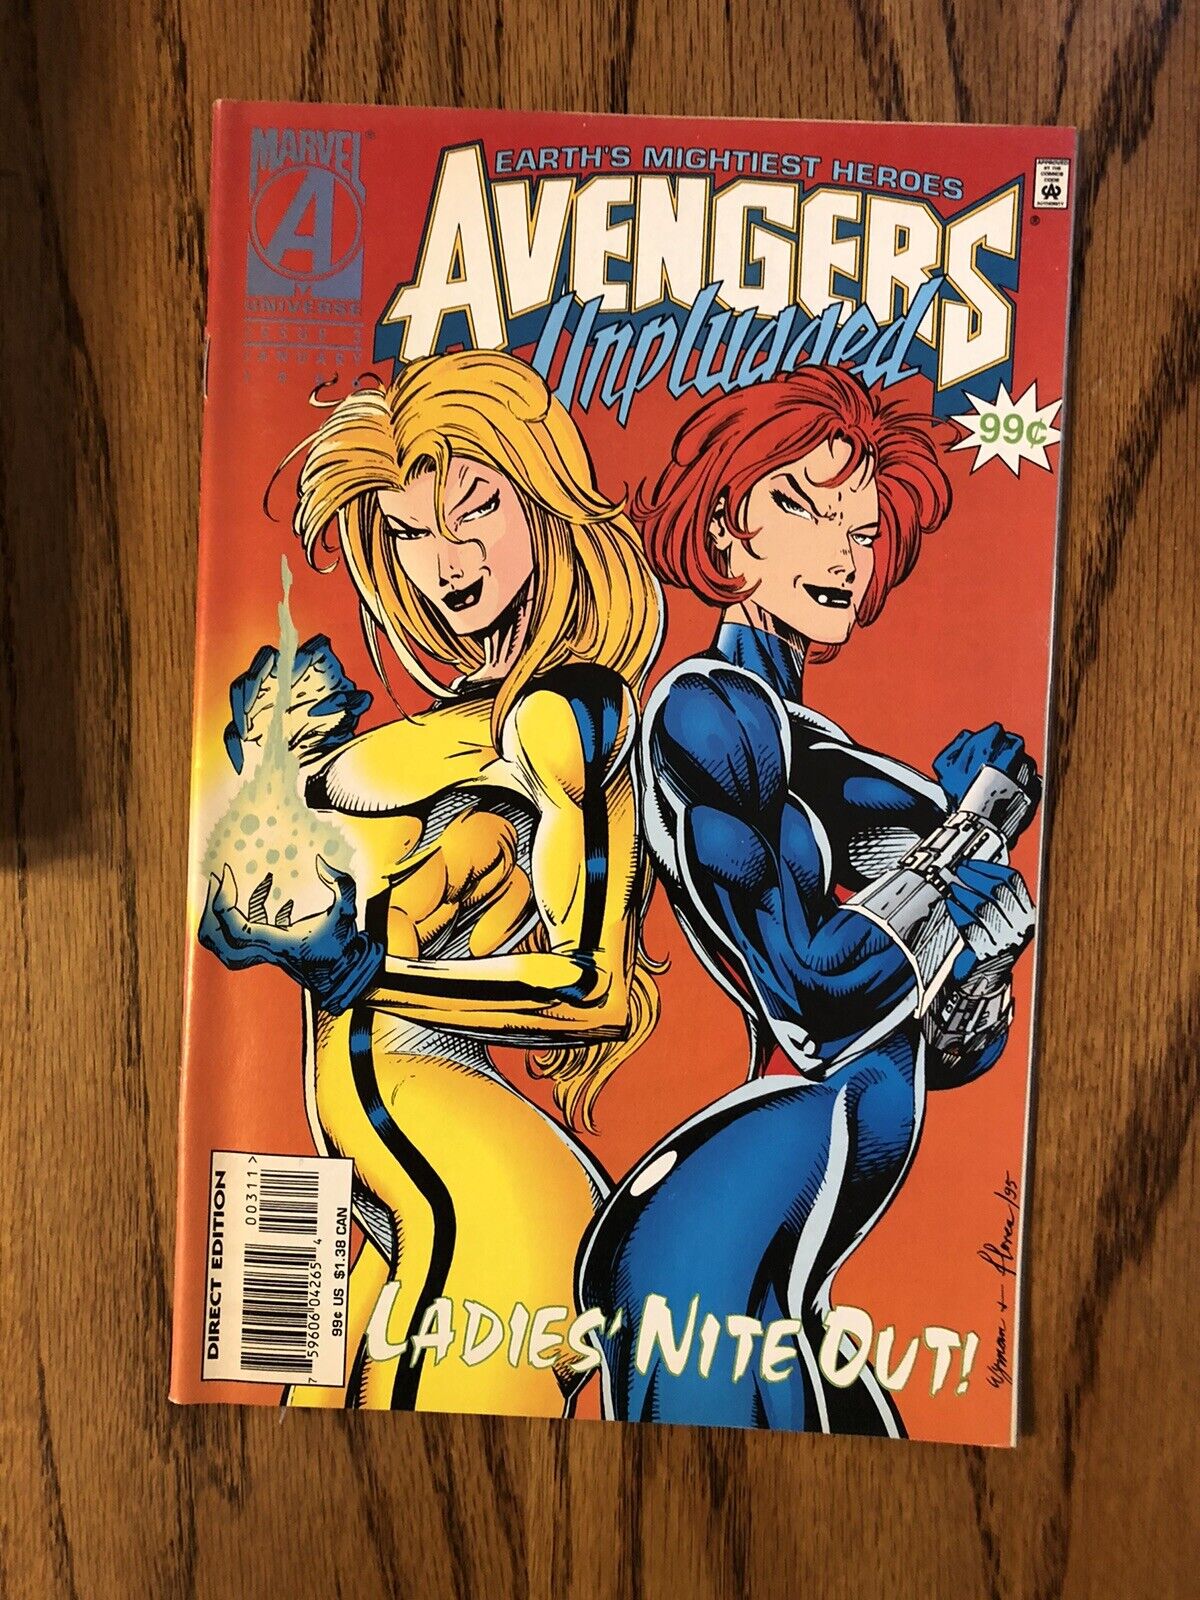 Marvel Comics Avengers Unplugged #3 (January 1996)